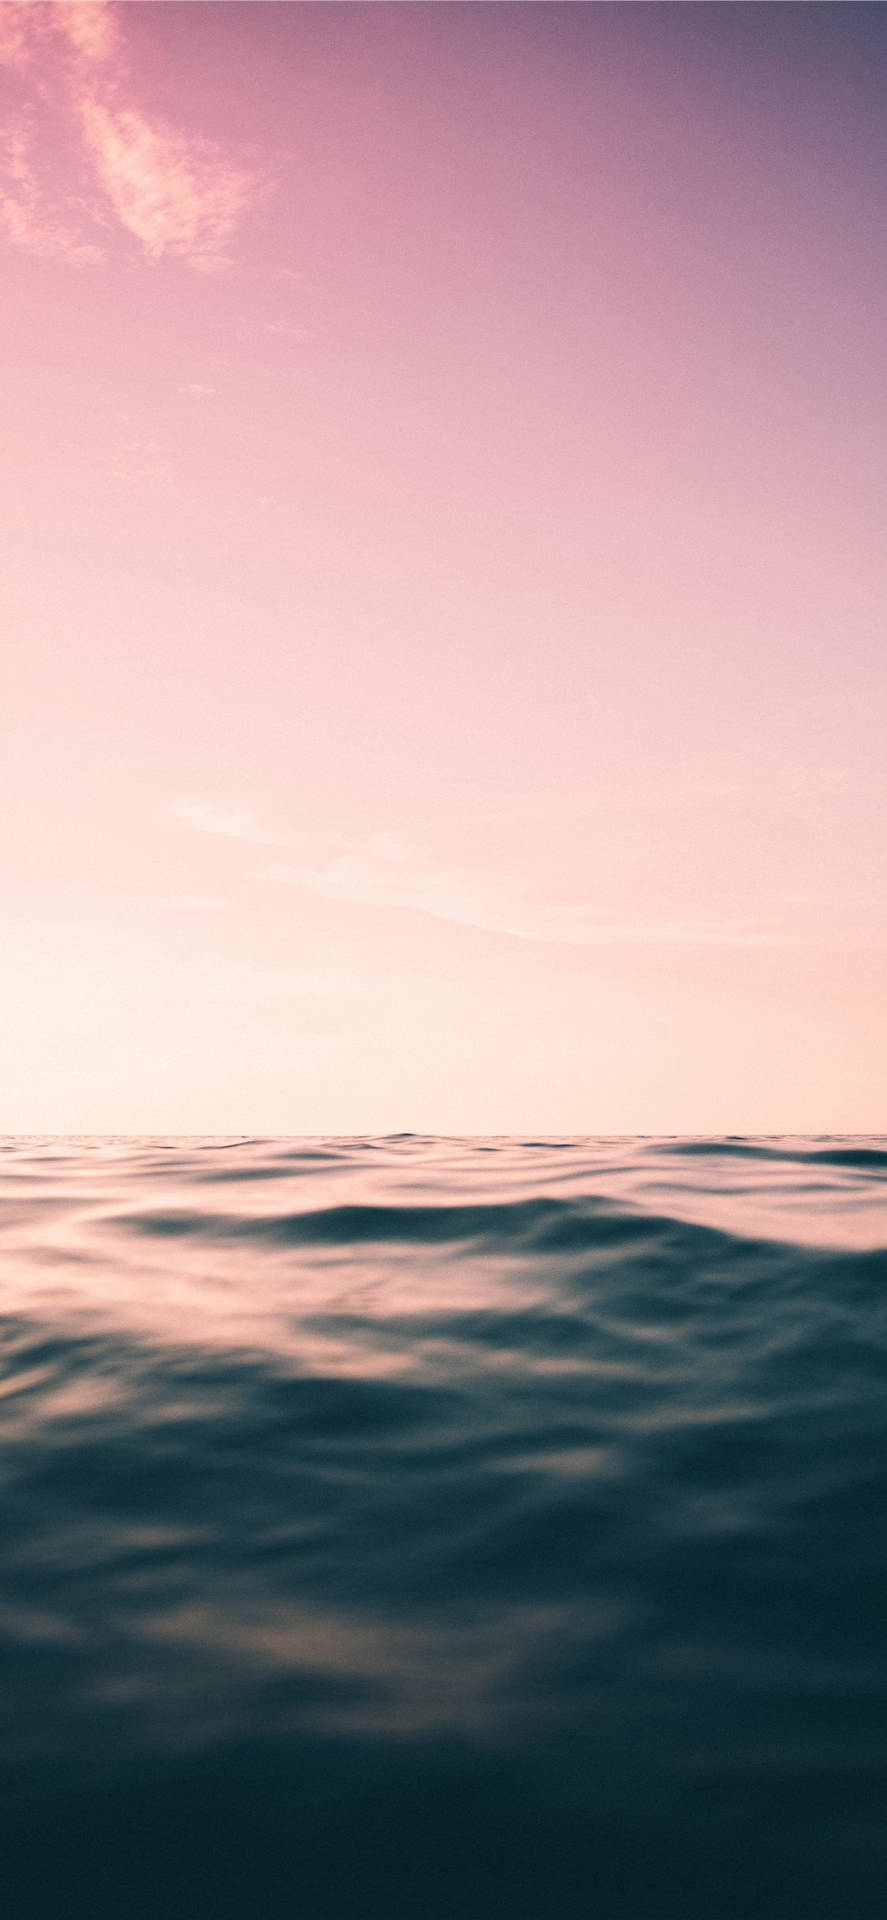 Aesthetic Ocean Water For IPhone Wallpaper